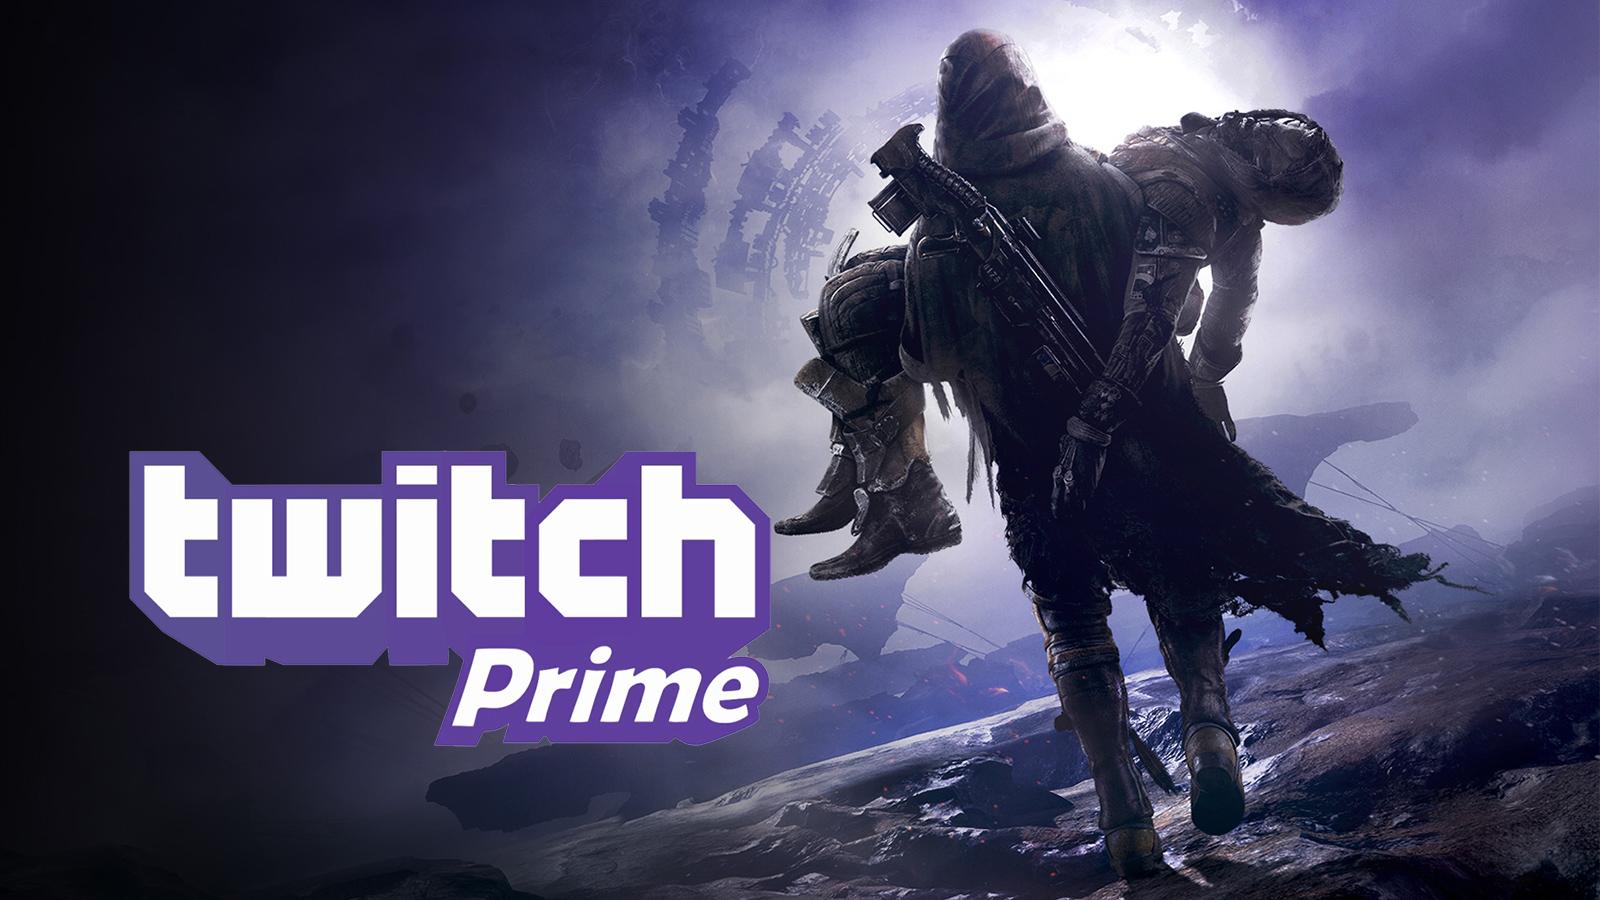 Twitch Prime adds Destiny 2 loot